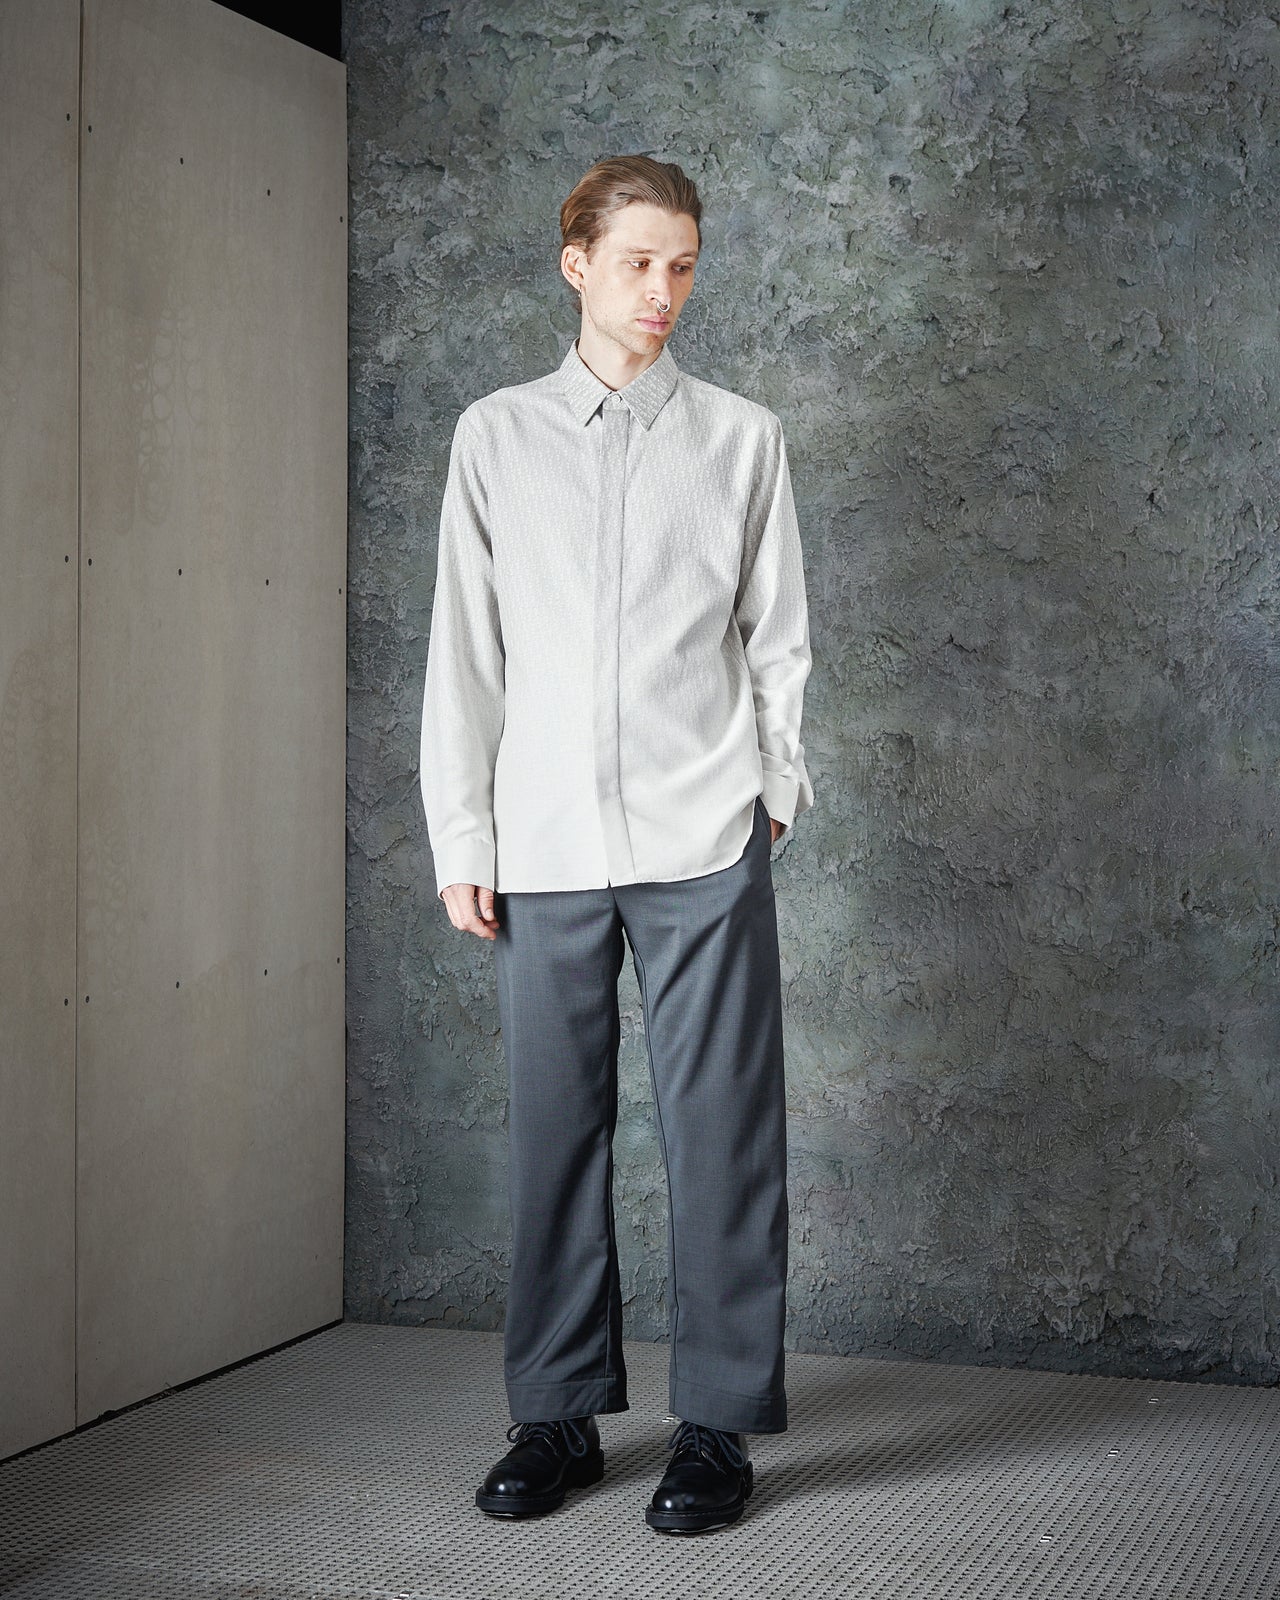 Dior x Daniel Arsham SS 2020 Oblique gradient collared shirt